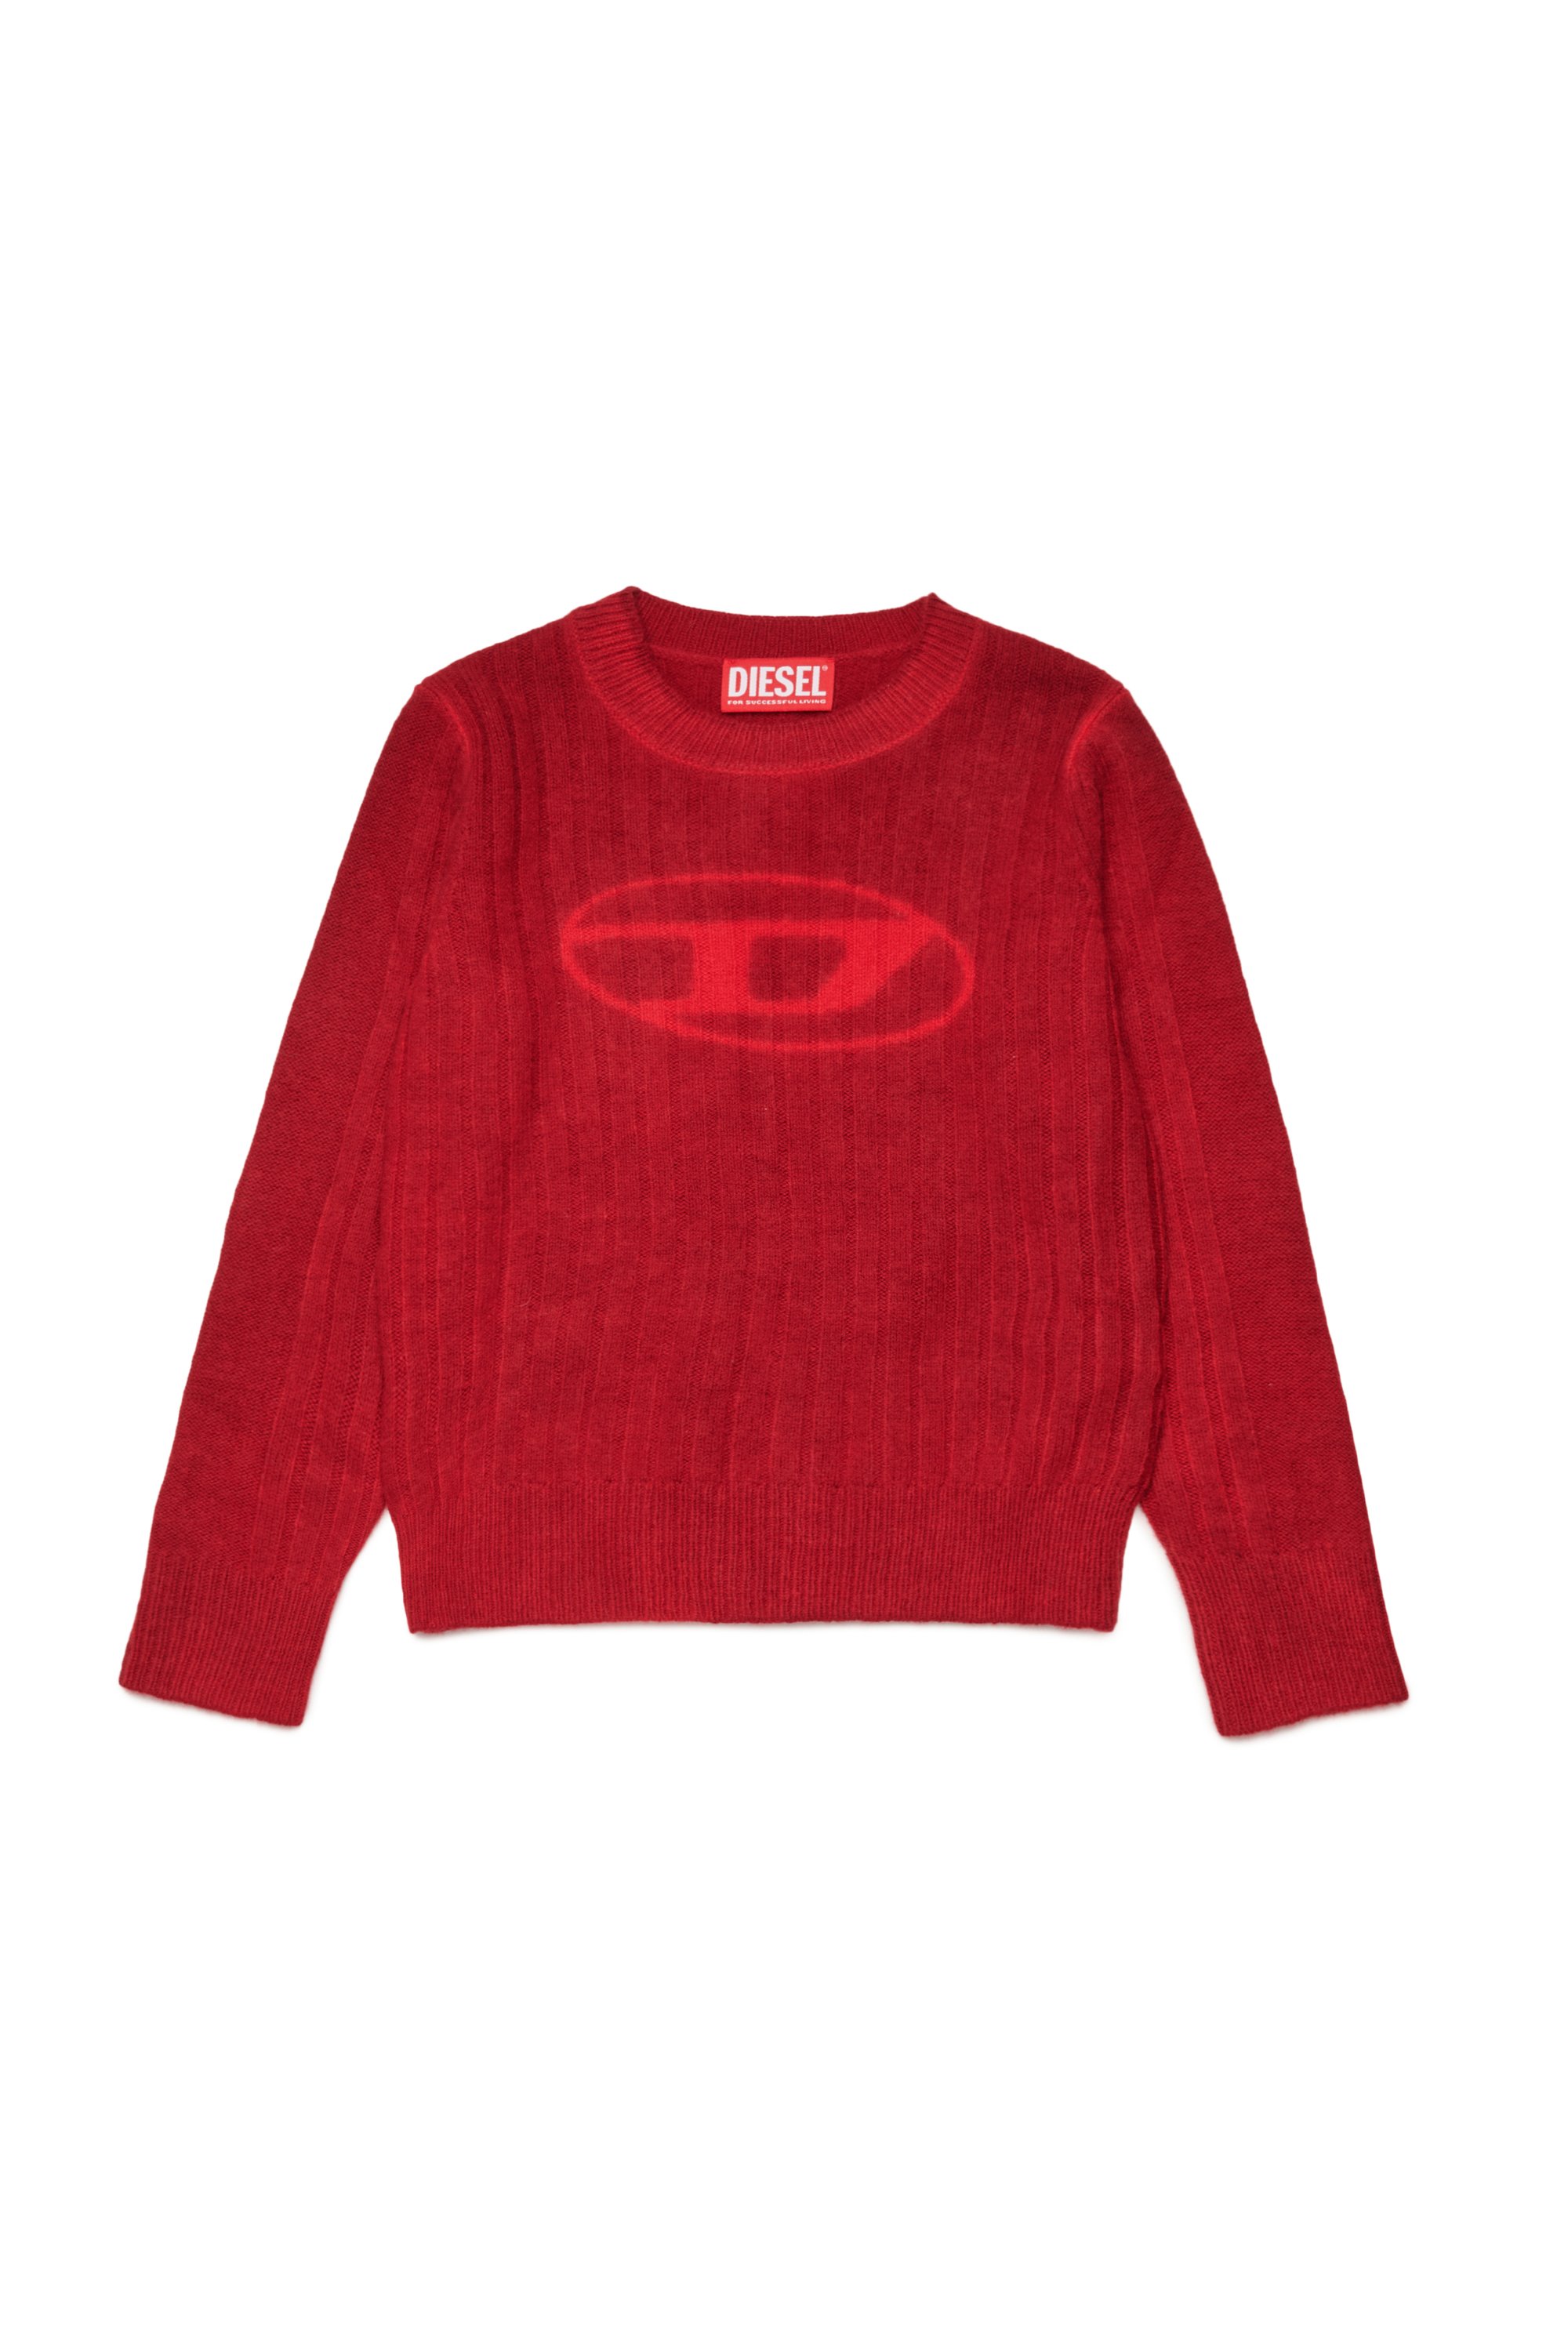 Diesel - KANDELEROD, Herren Behandelter Pullover mit Oval D-Logo in Rot - Image 1